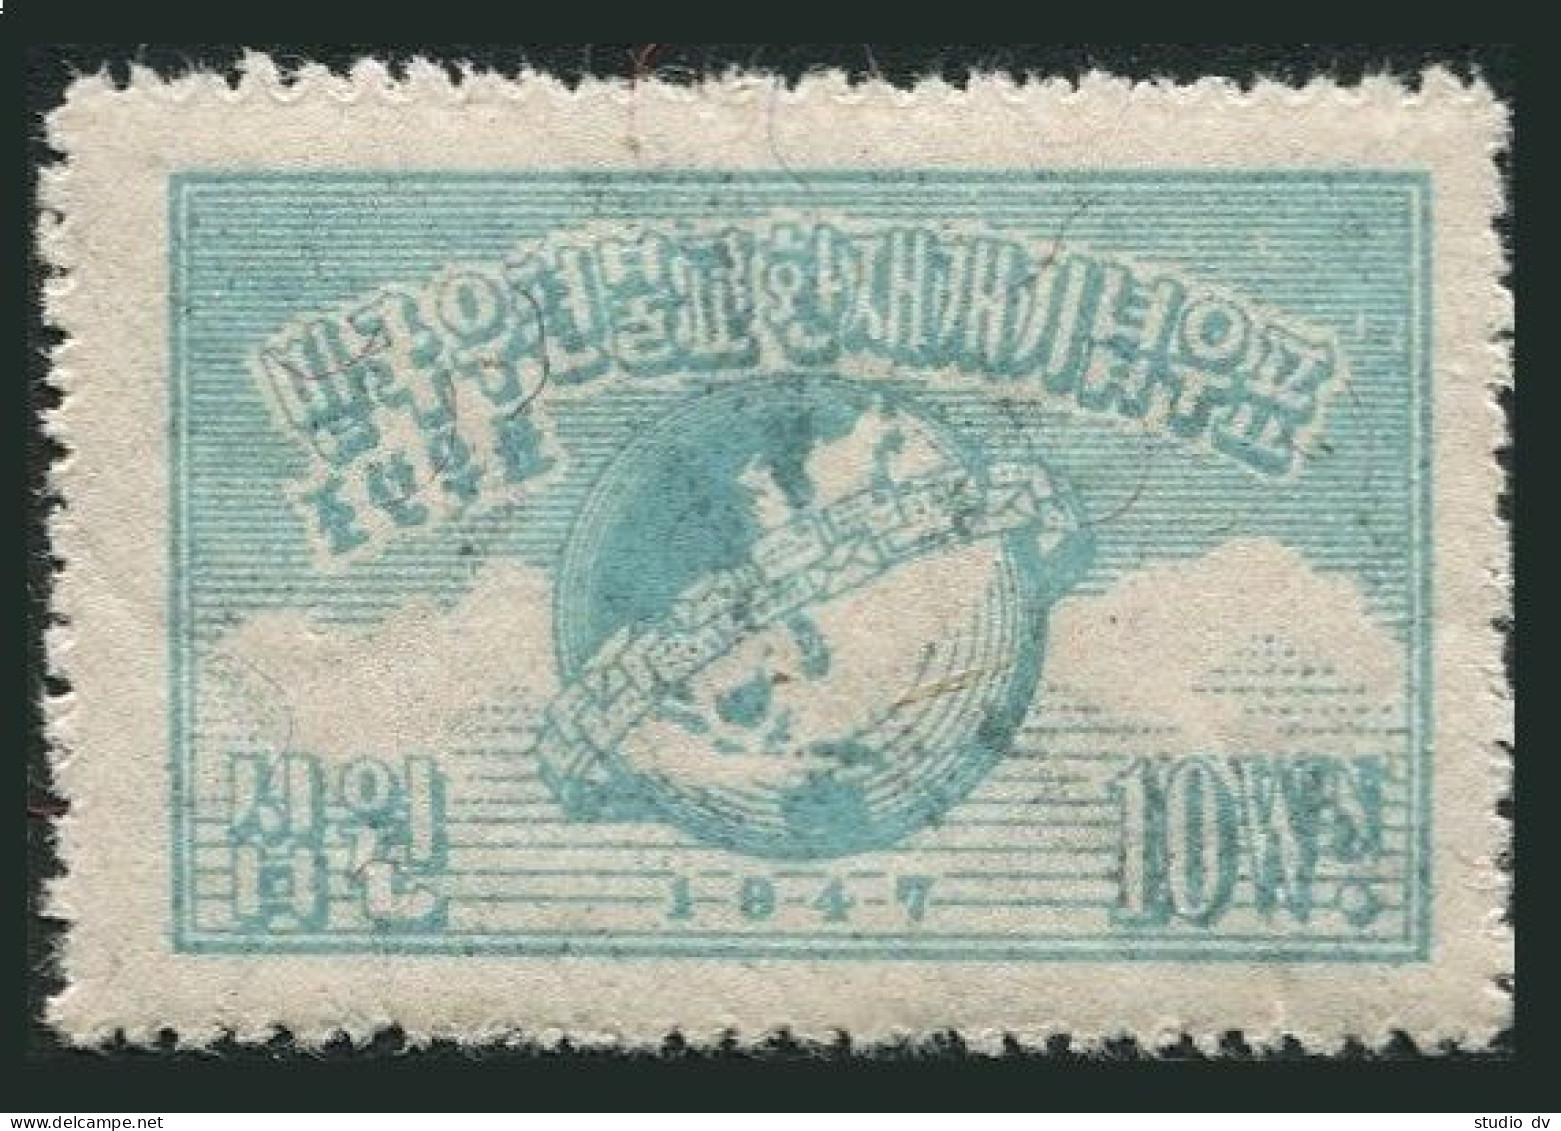 Korea South 77,MNH.Michel 23. International Mail Service,1947.Globe. - Korea, South